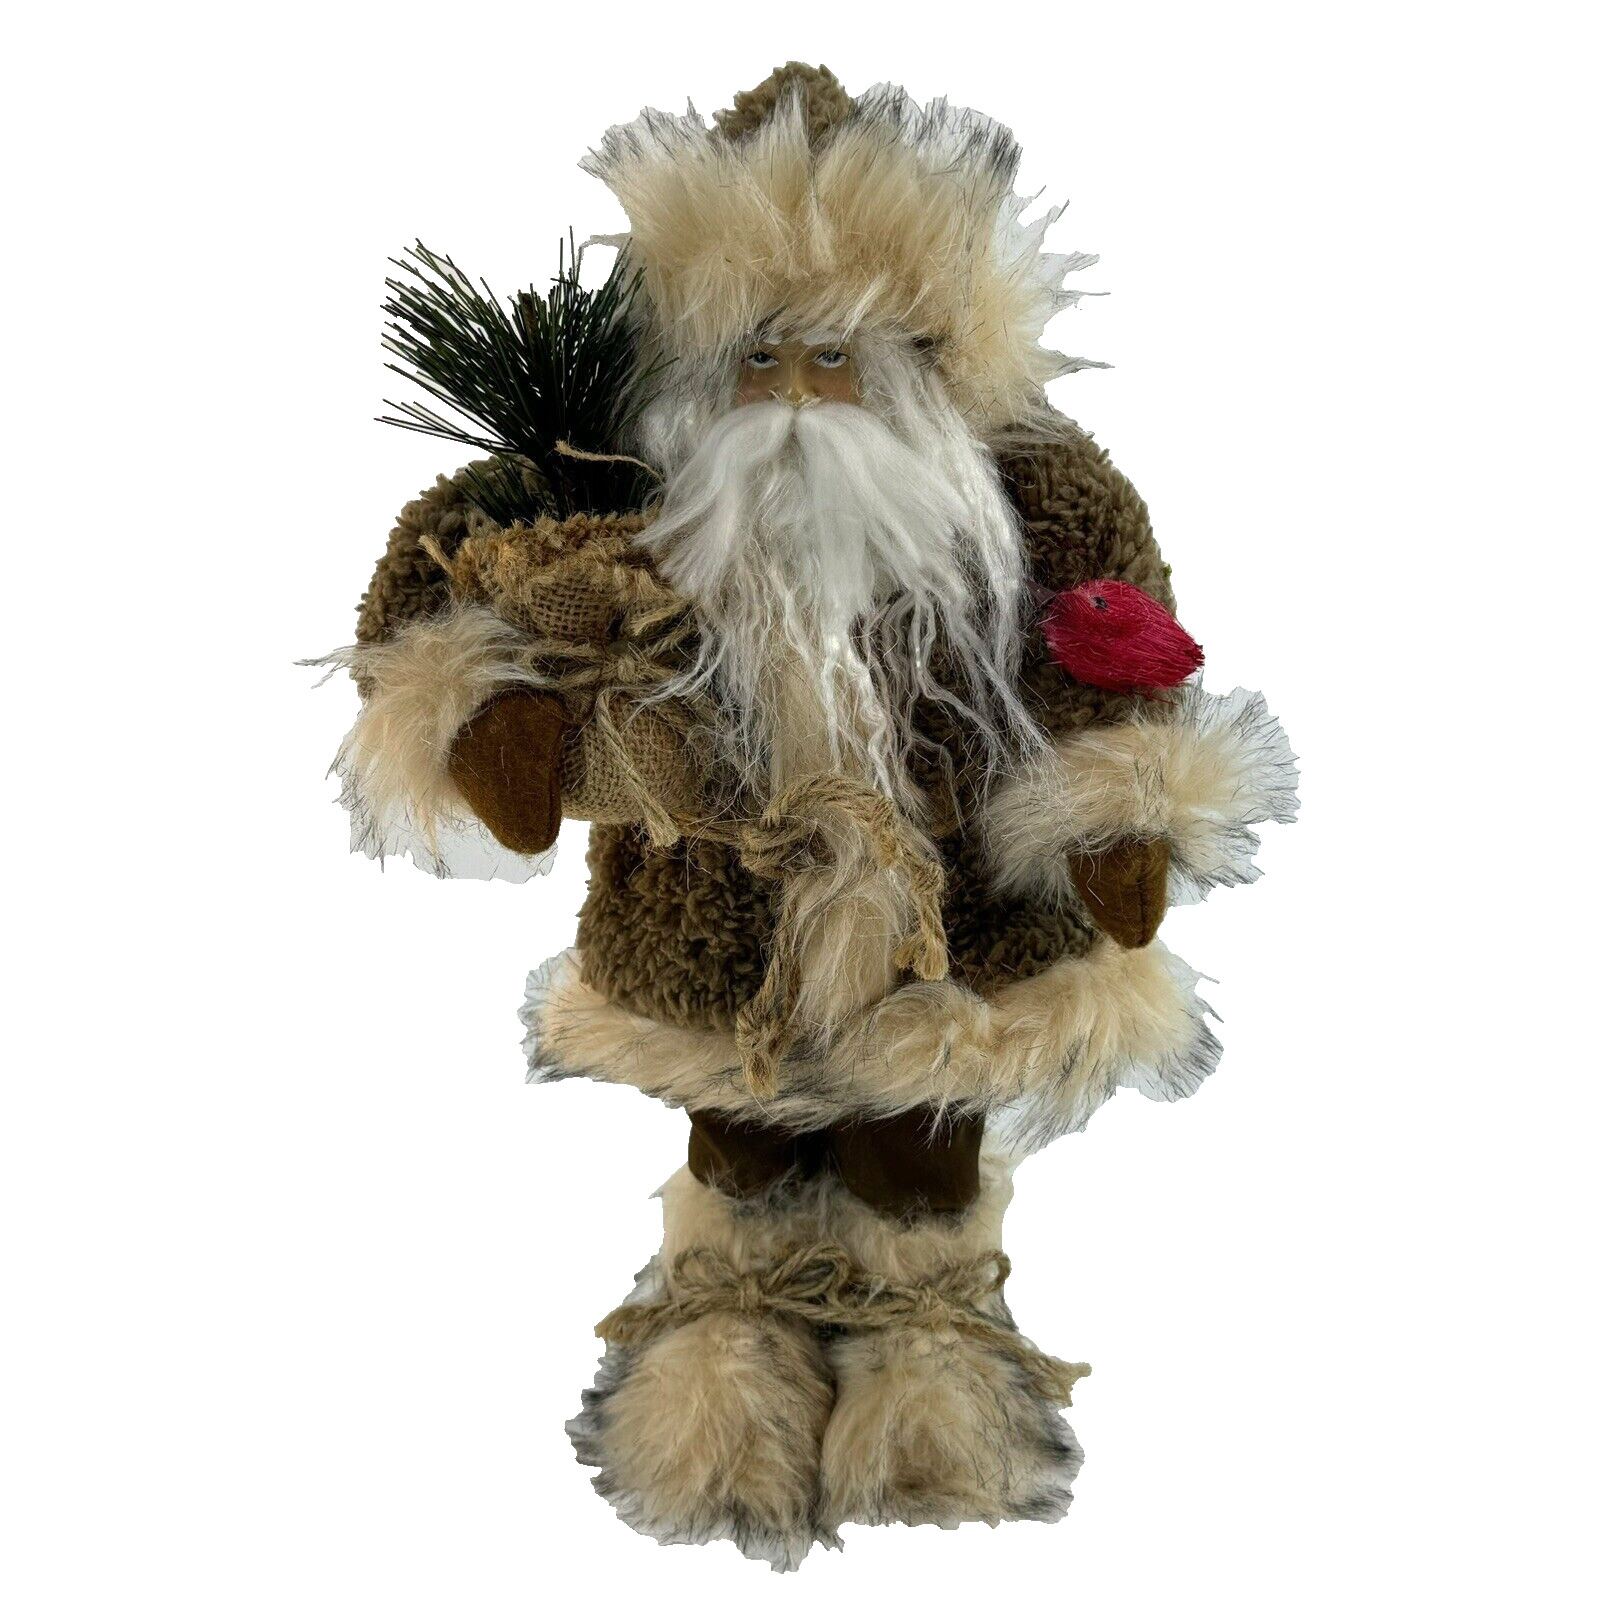 Old World Santa Claus Figurine Woodland Forest Faux Fur Folk Art Christmas